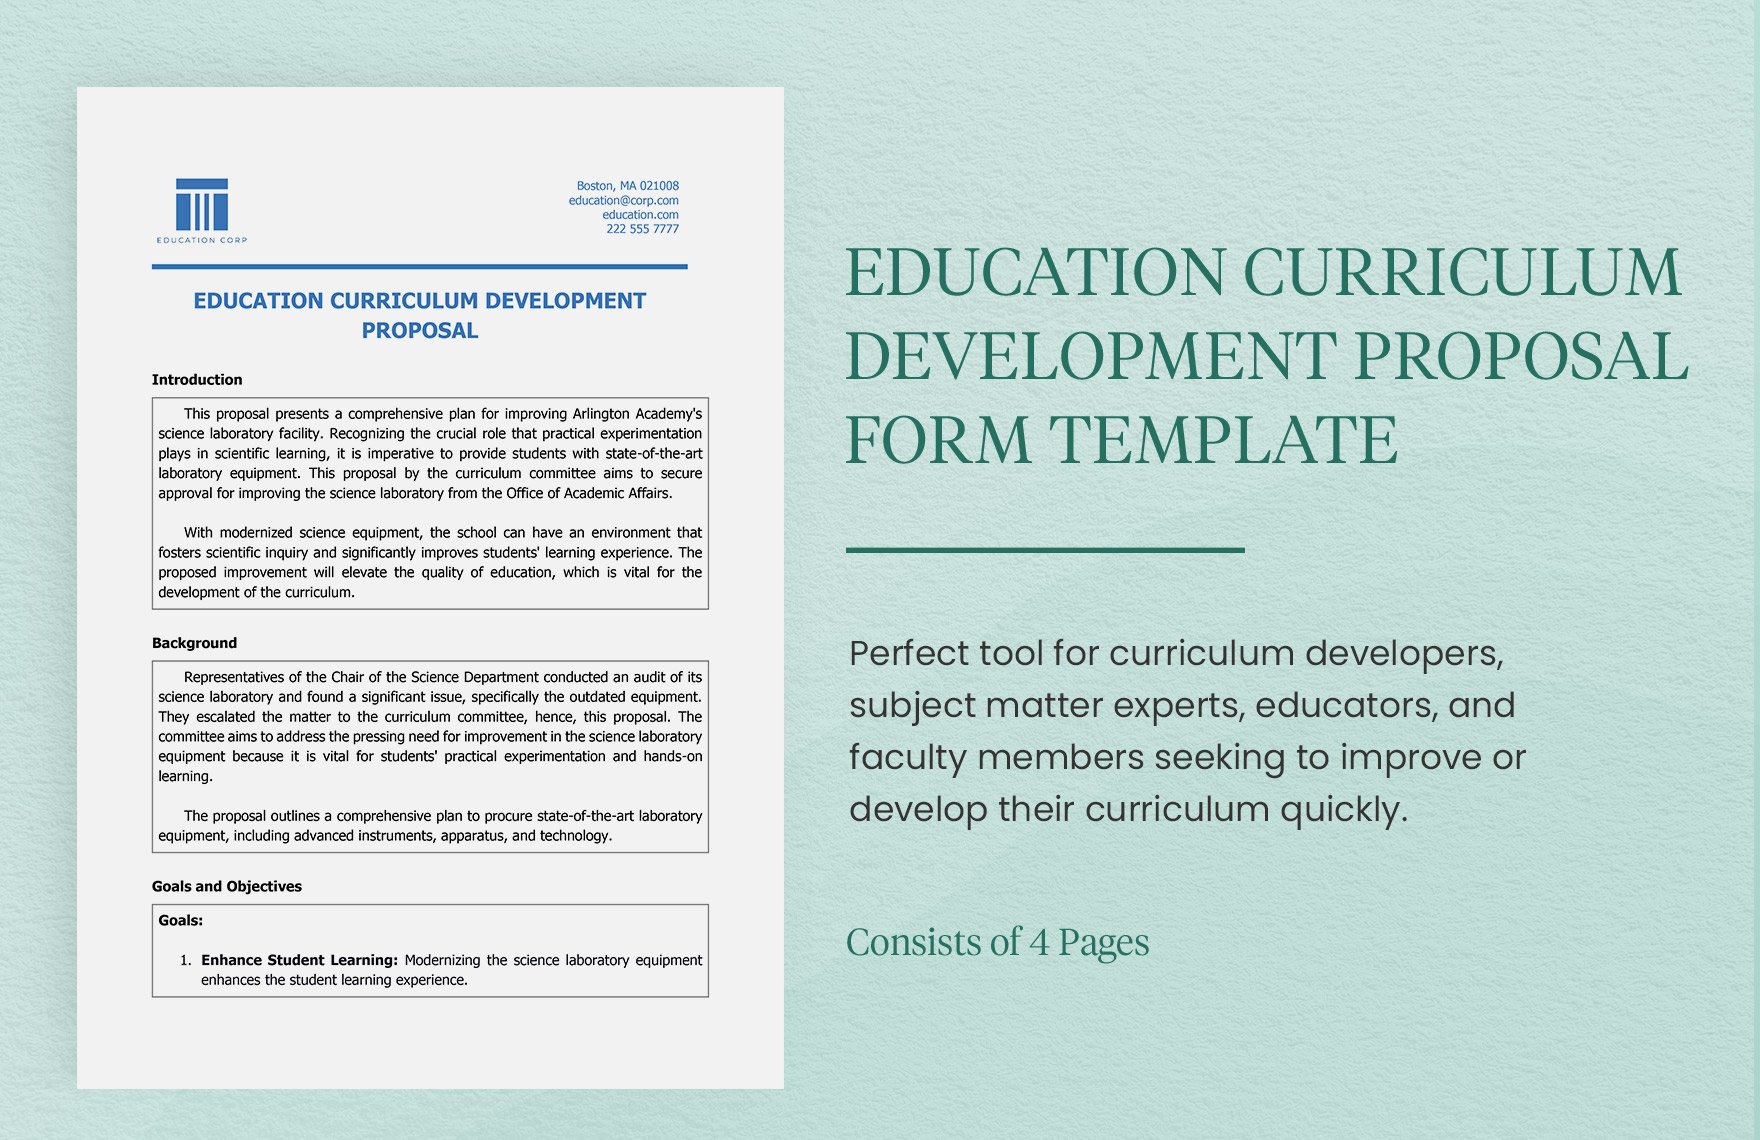 Education Curriculum Development Proposal Form Template in Word, Google Docs